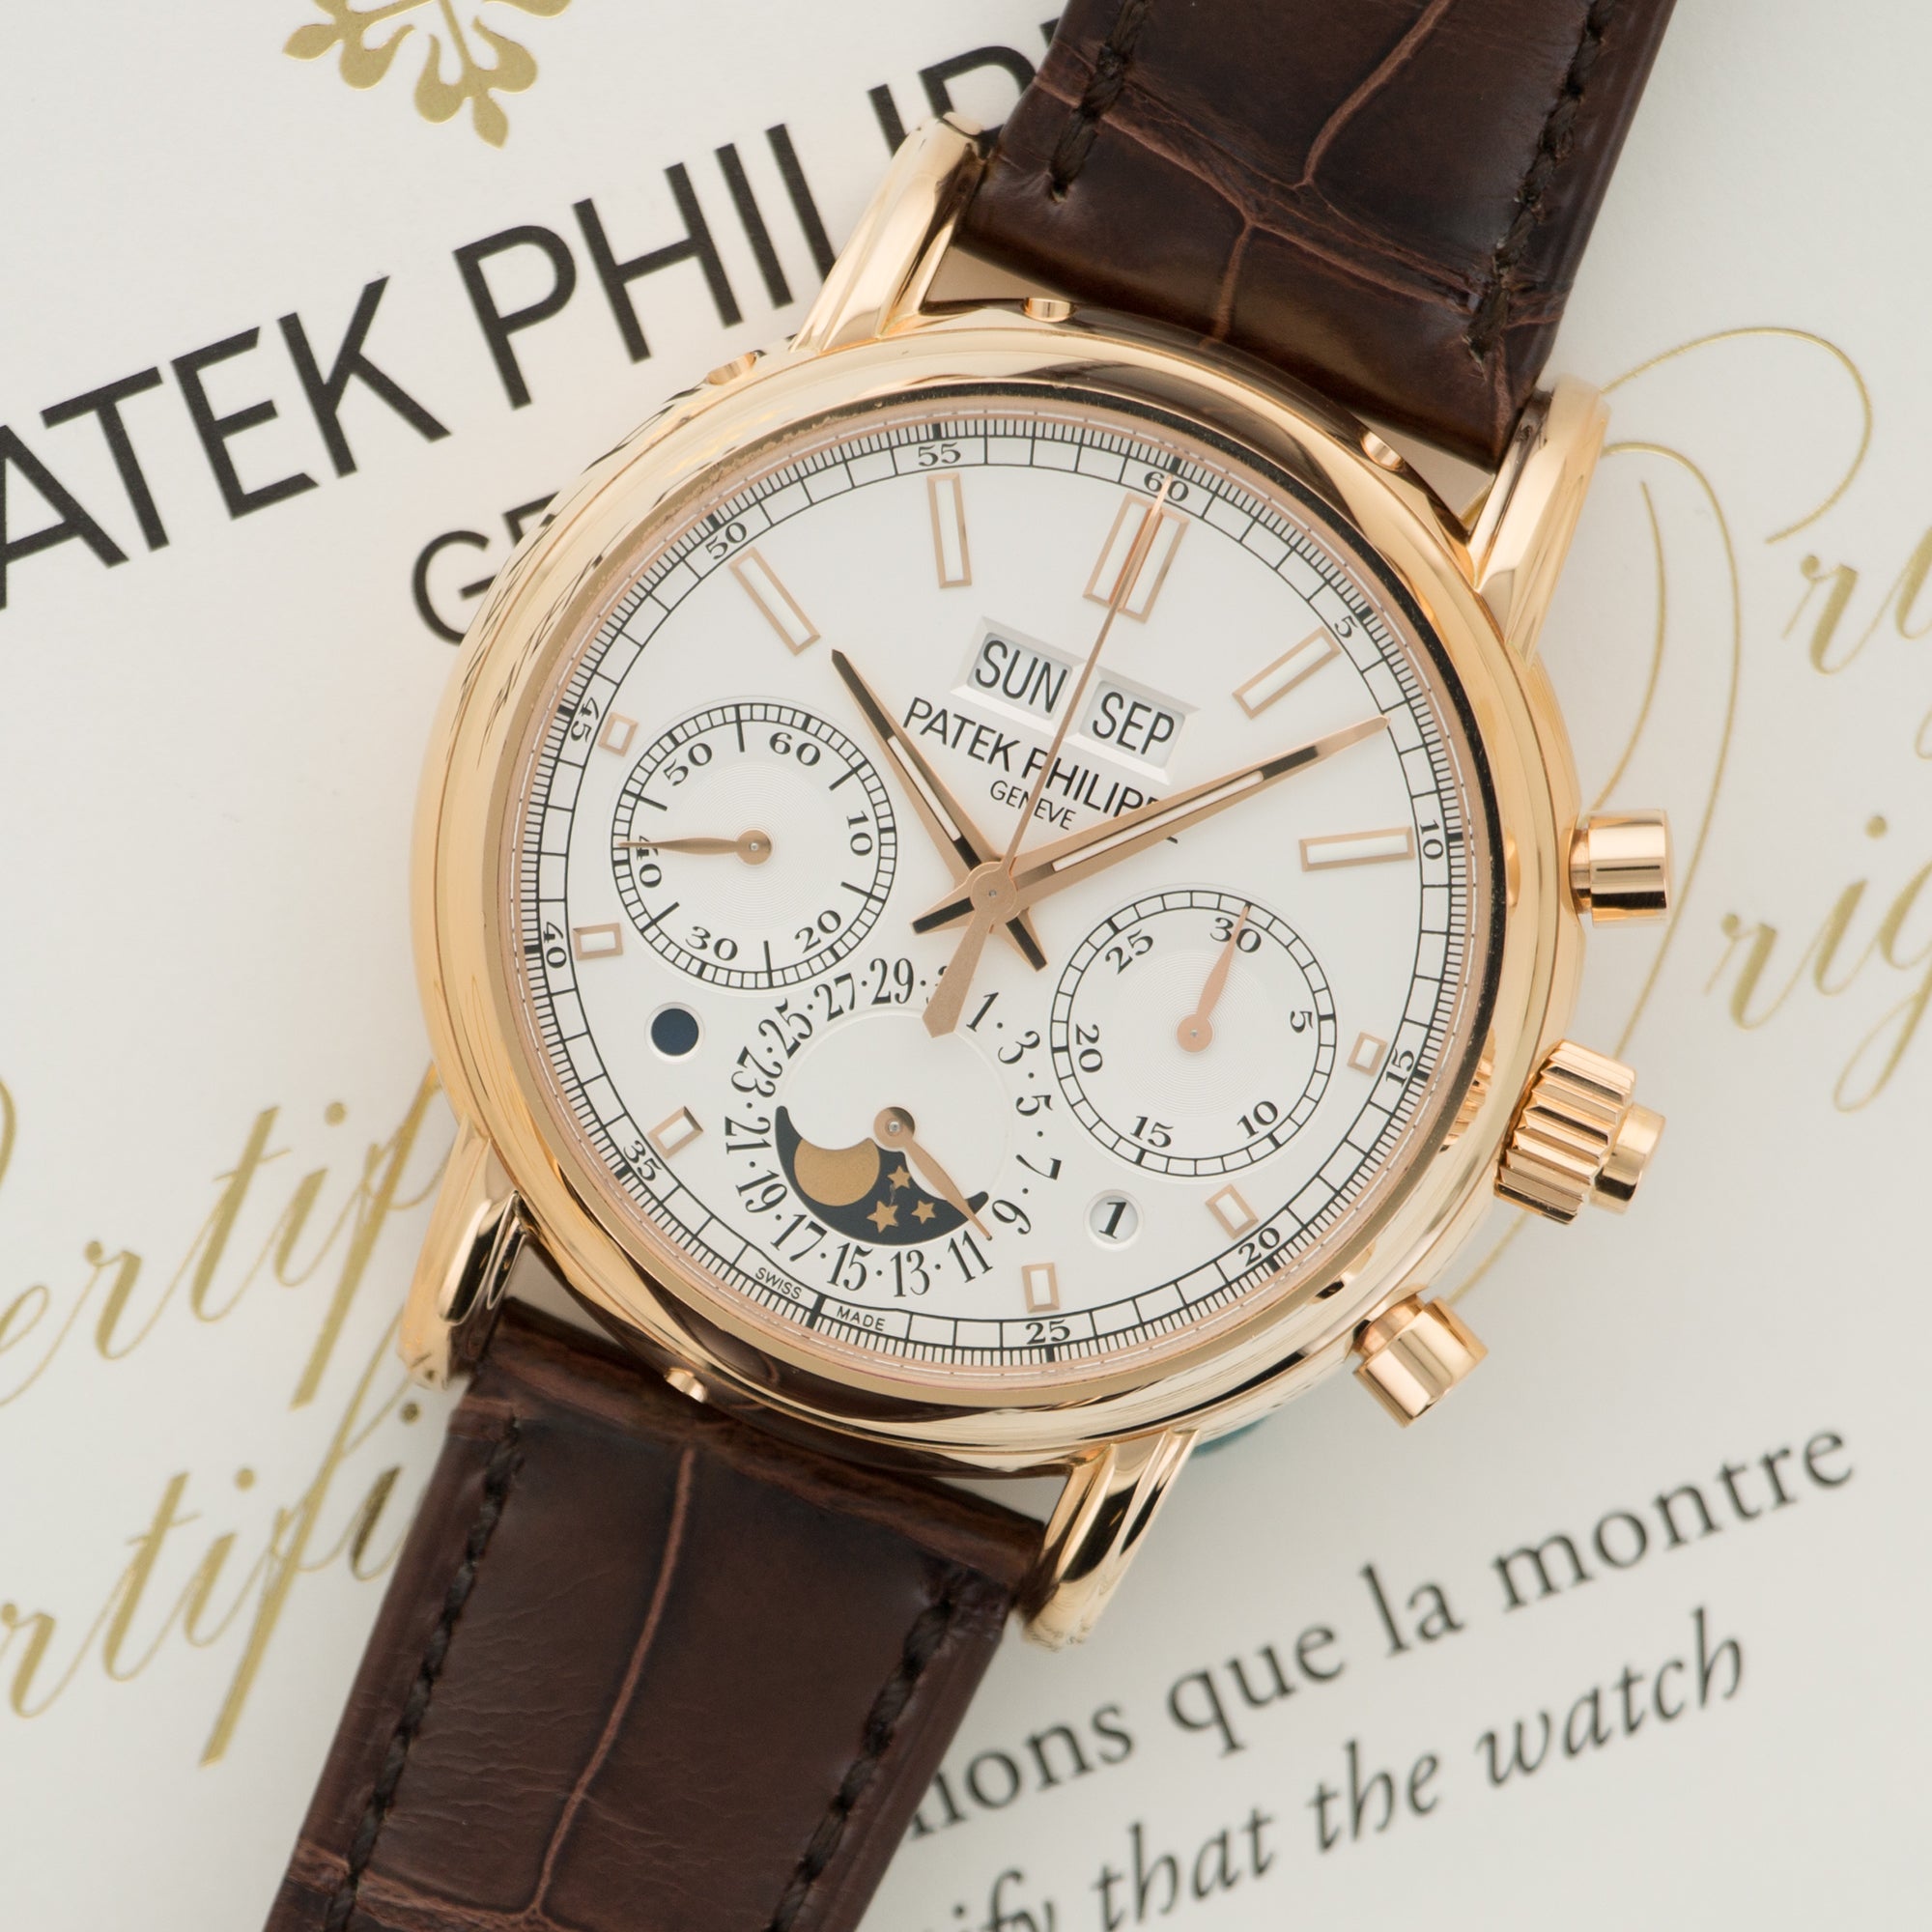 Patek Philippe - Patek Philippe Rose Gold Perpetual Chronograph Split Seconds Watch Ref. 5204 - The Keystone Watches